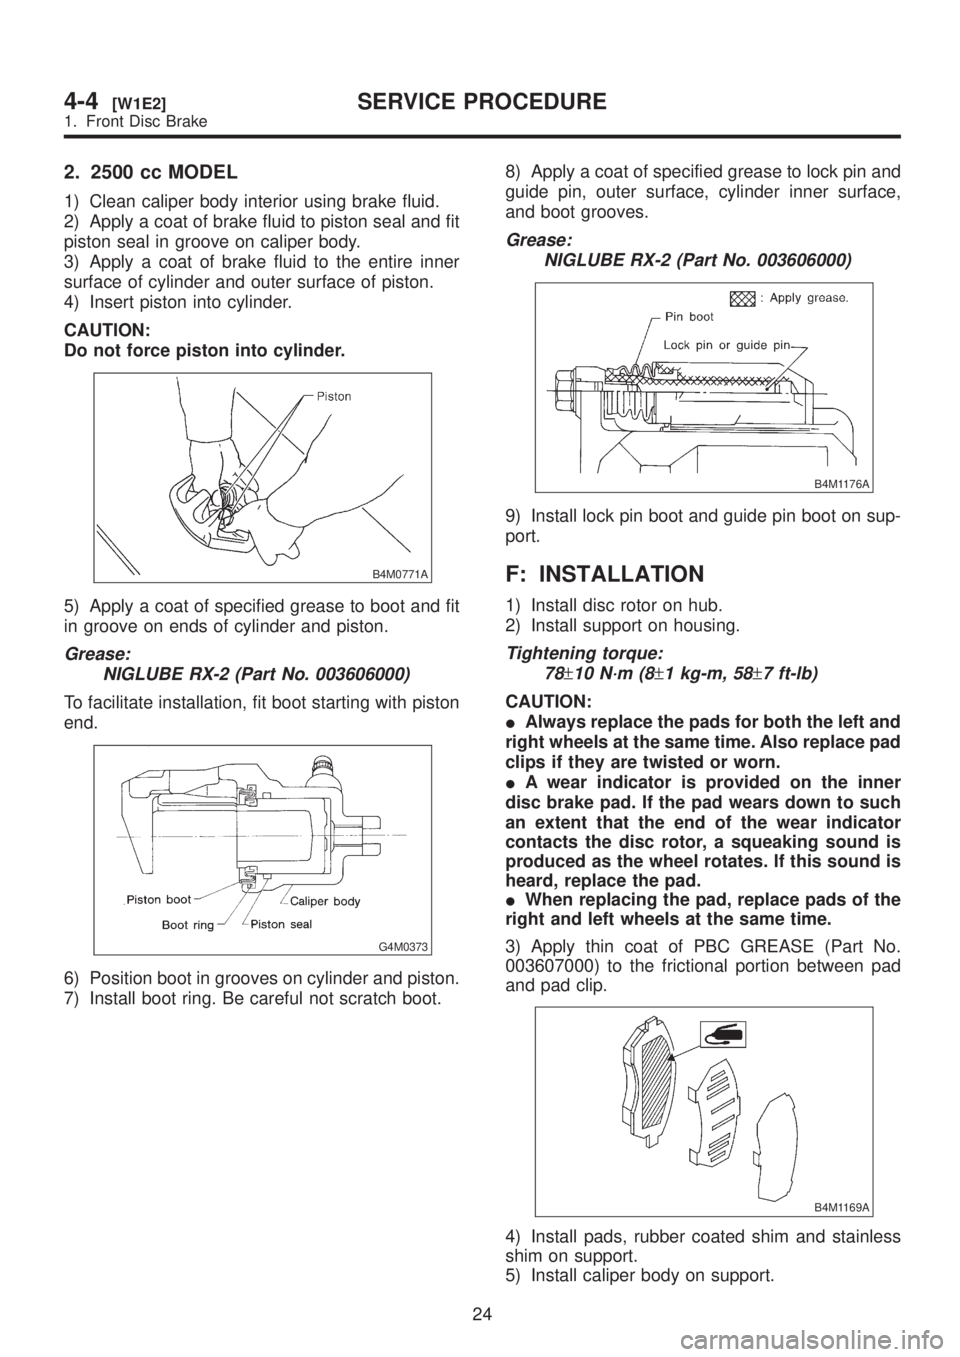 SUBARU LEGACY 1999  Service Repair Manual 2. 2500 cc MODEL
1) Clean caliper body interior using brake fluid.
2) Apply a coat of brake fluid to piston seal and fit
piston seal in groove on caliper body.
3) Apply a coat of brake fluid to the en